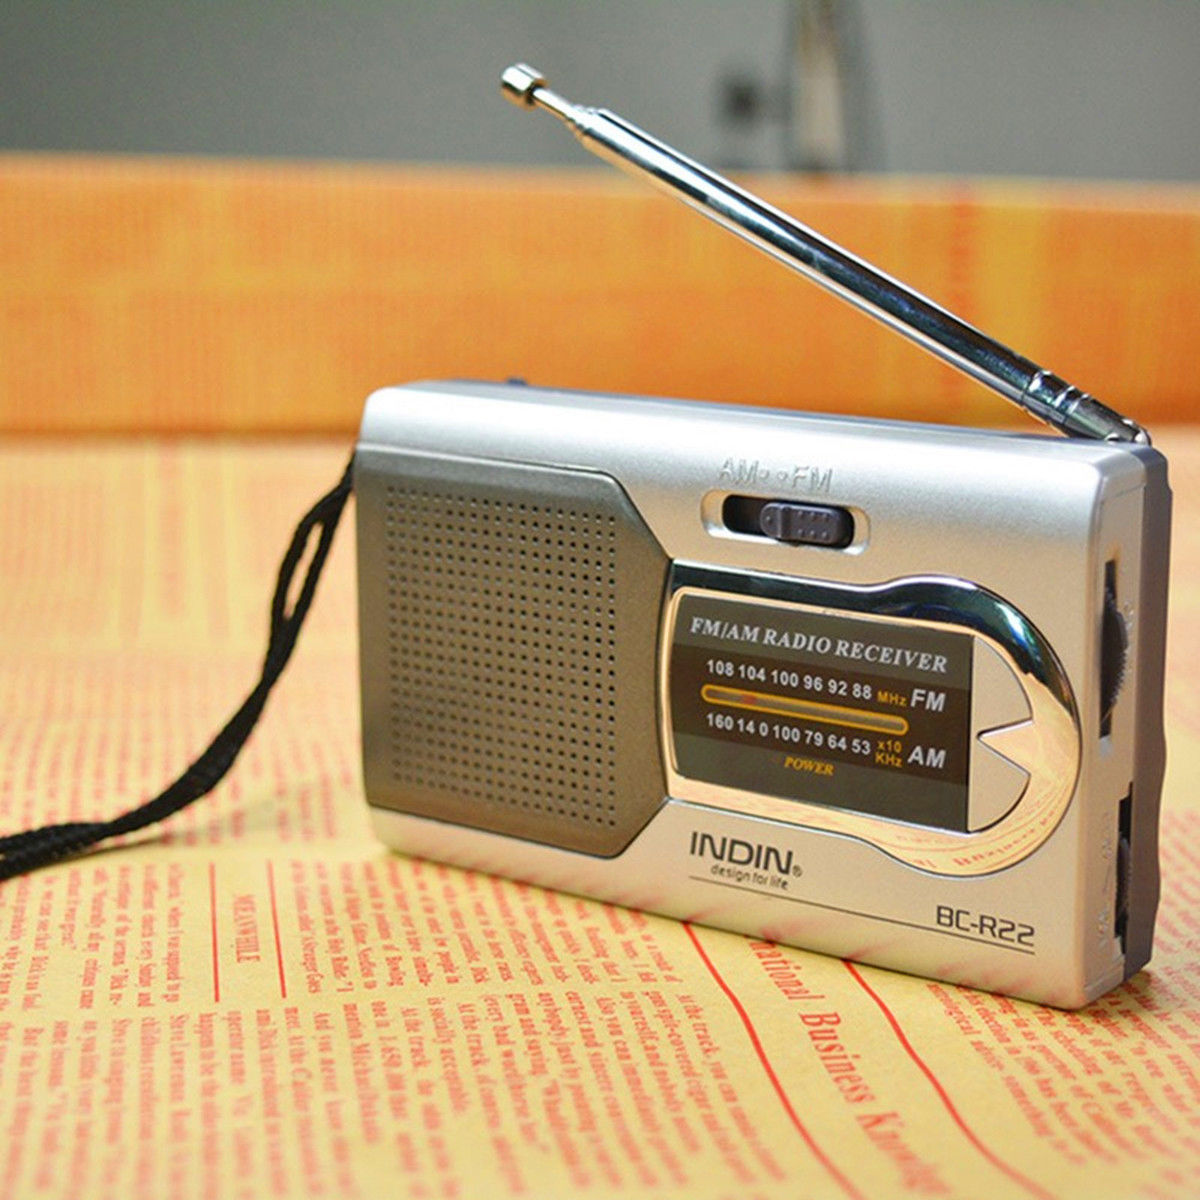 Morning walkman speaker player bc -r22 bærbar am / fm radiomodtager indbygget højttaler mini radio år